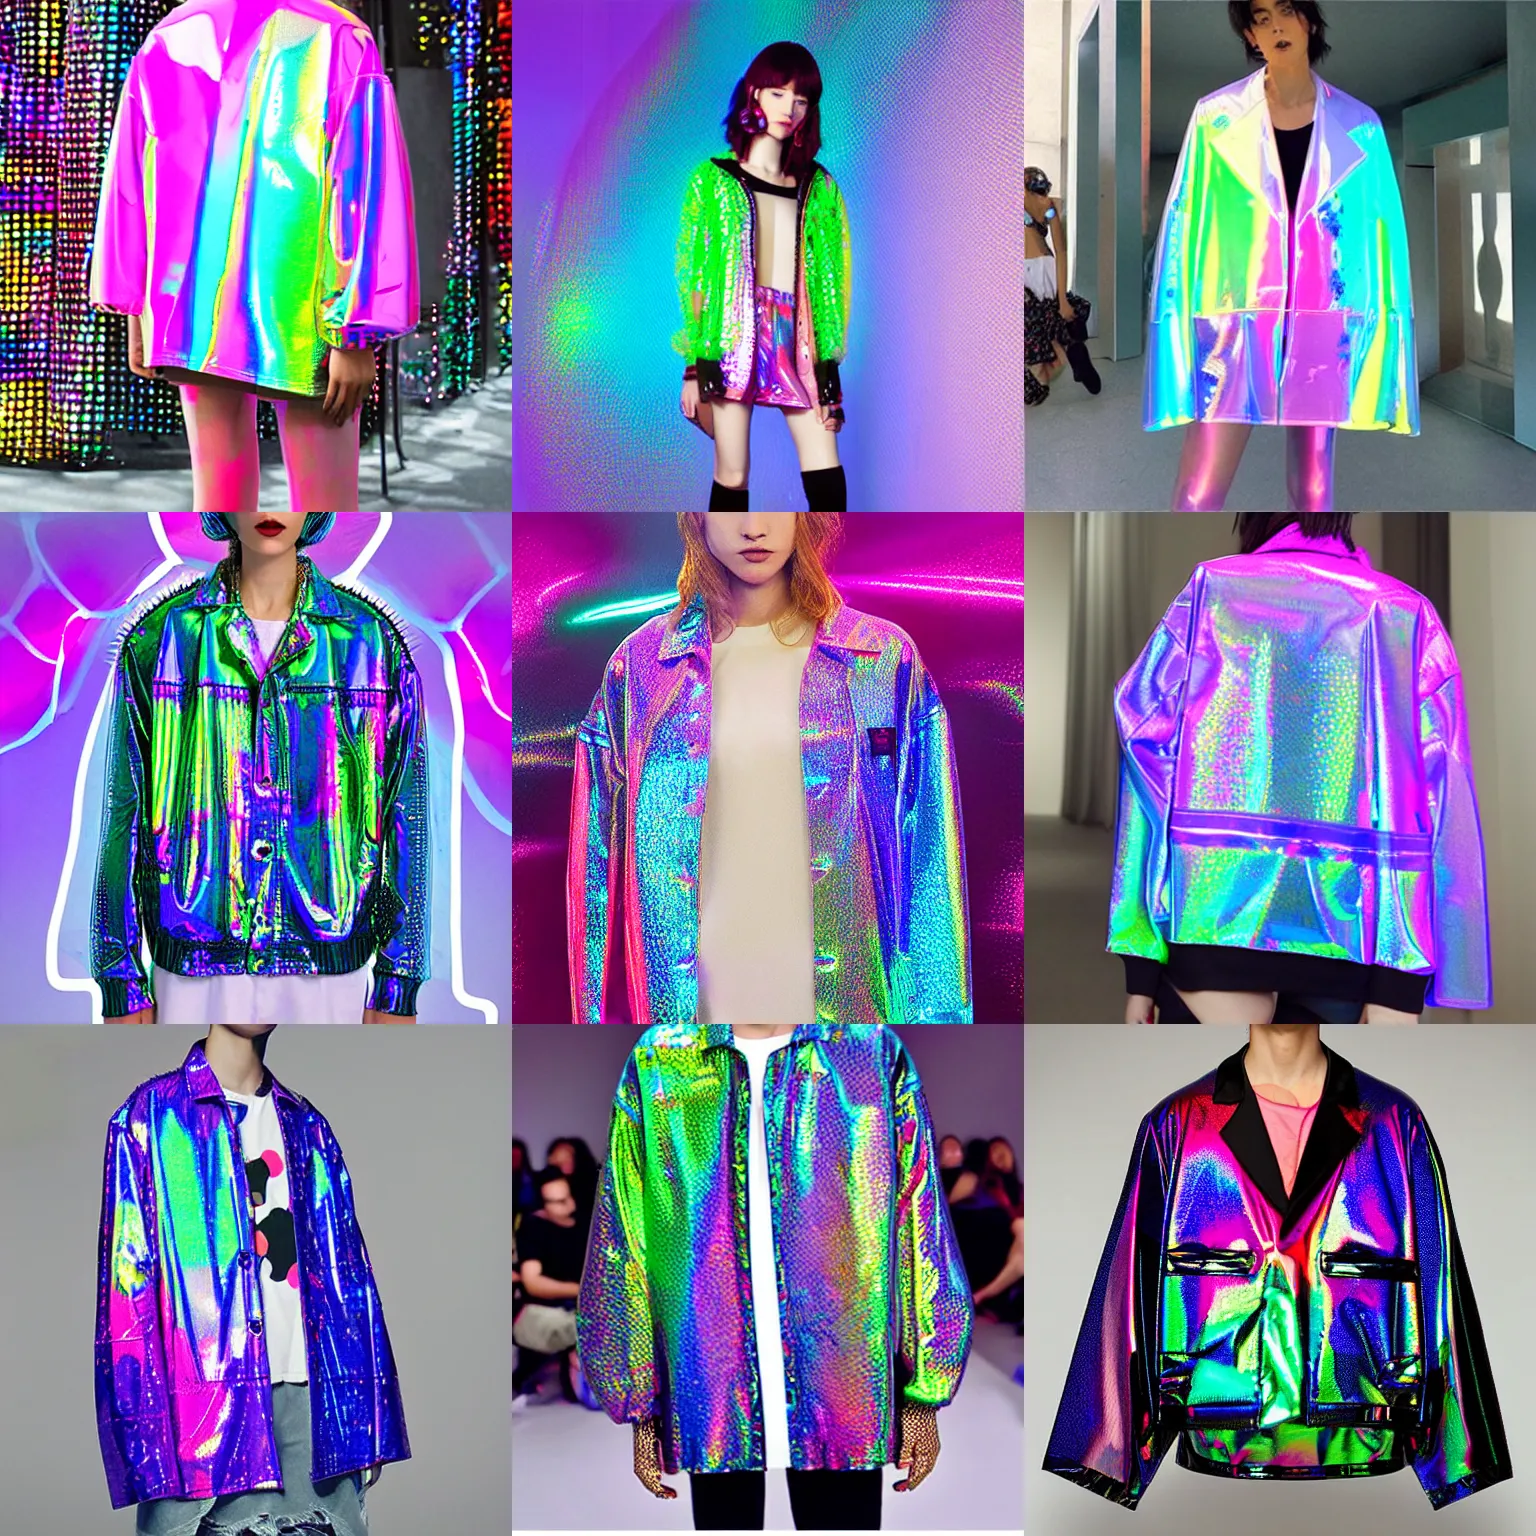 I NEED this jacket in EVERY COLOUR @Glowmode #glowmode